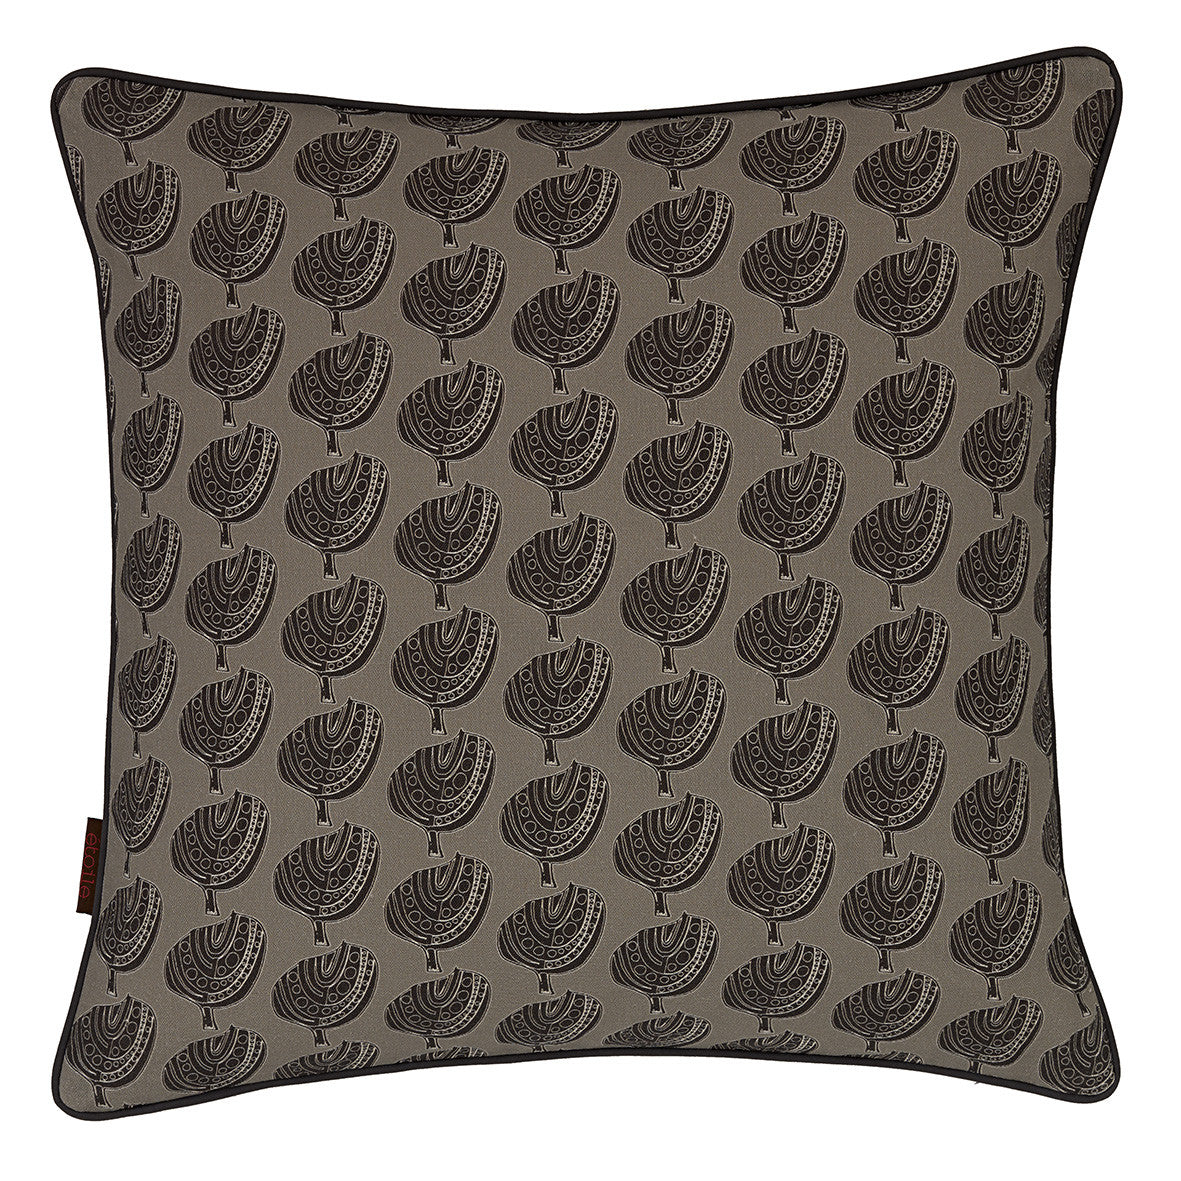 Graphic Apple Tree Pattern Printed Linen Union Decorative Throw Pillow Cushion 45x45cm (18x18")